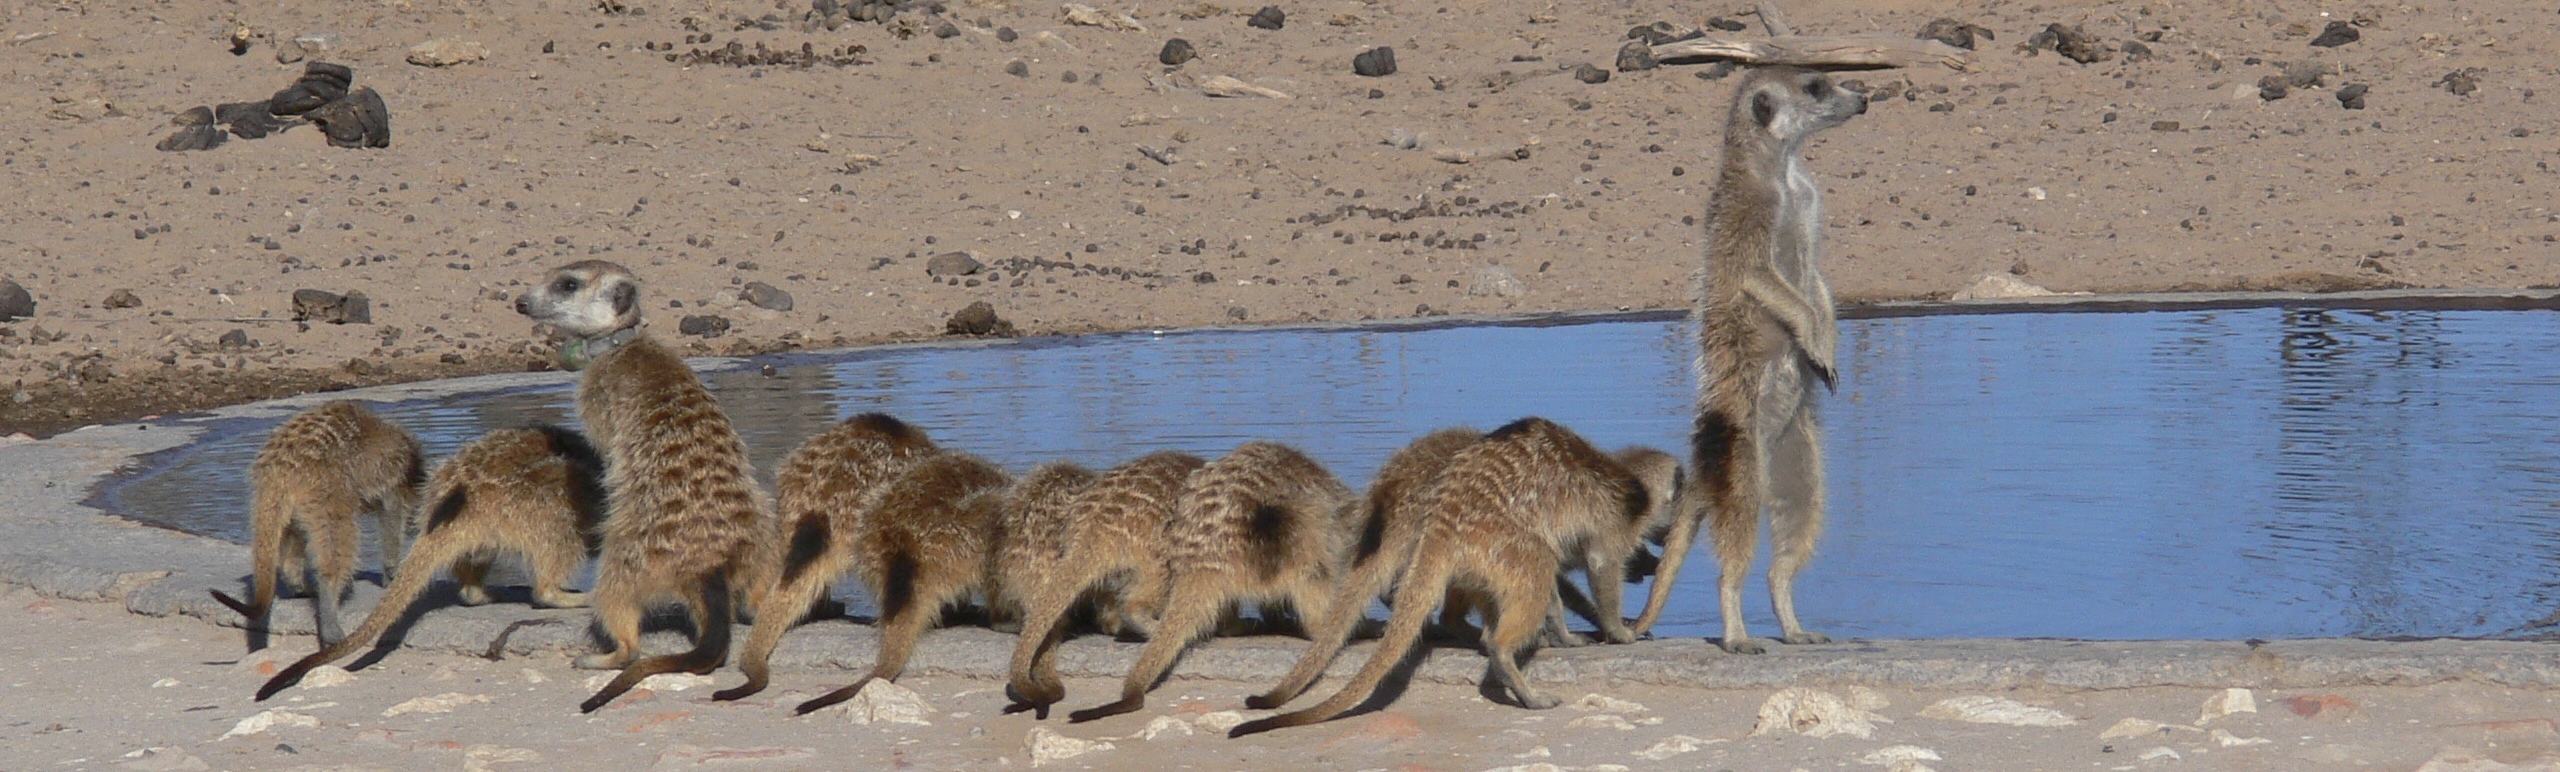 Meet or film the KMP meerkats